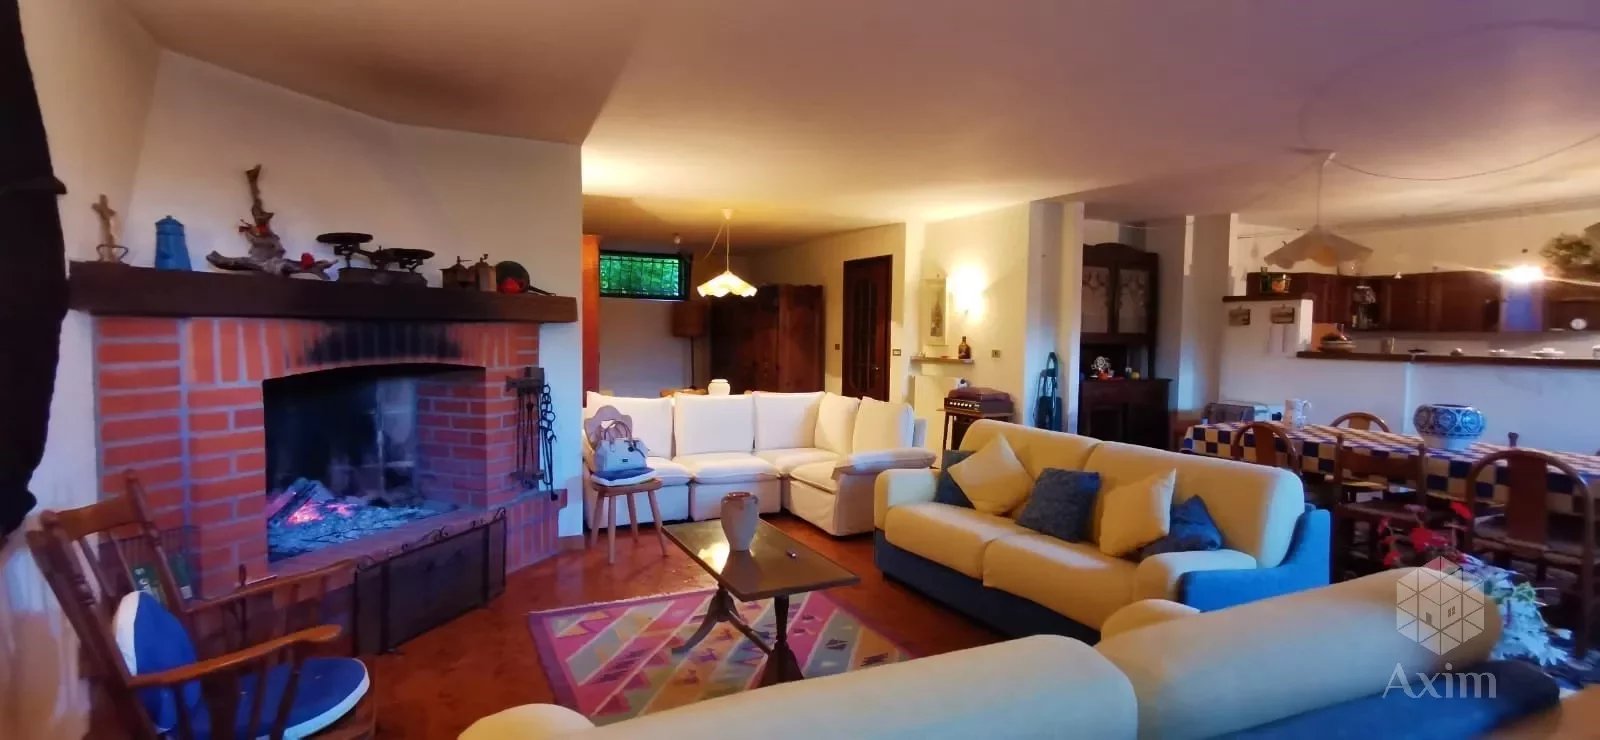 Living-room Exposed bricks